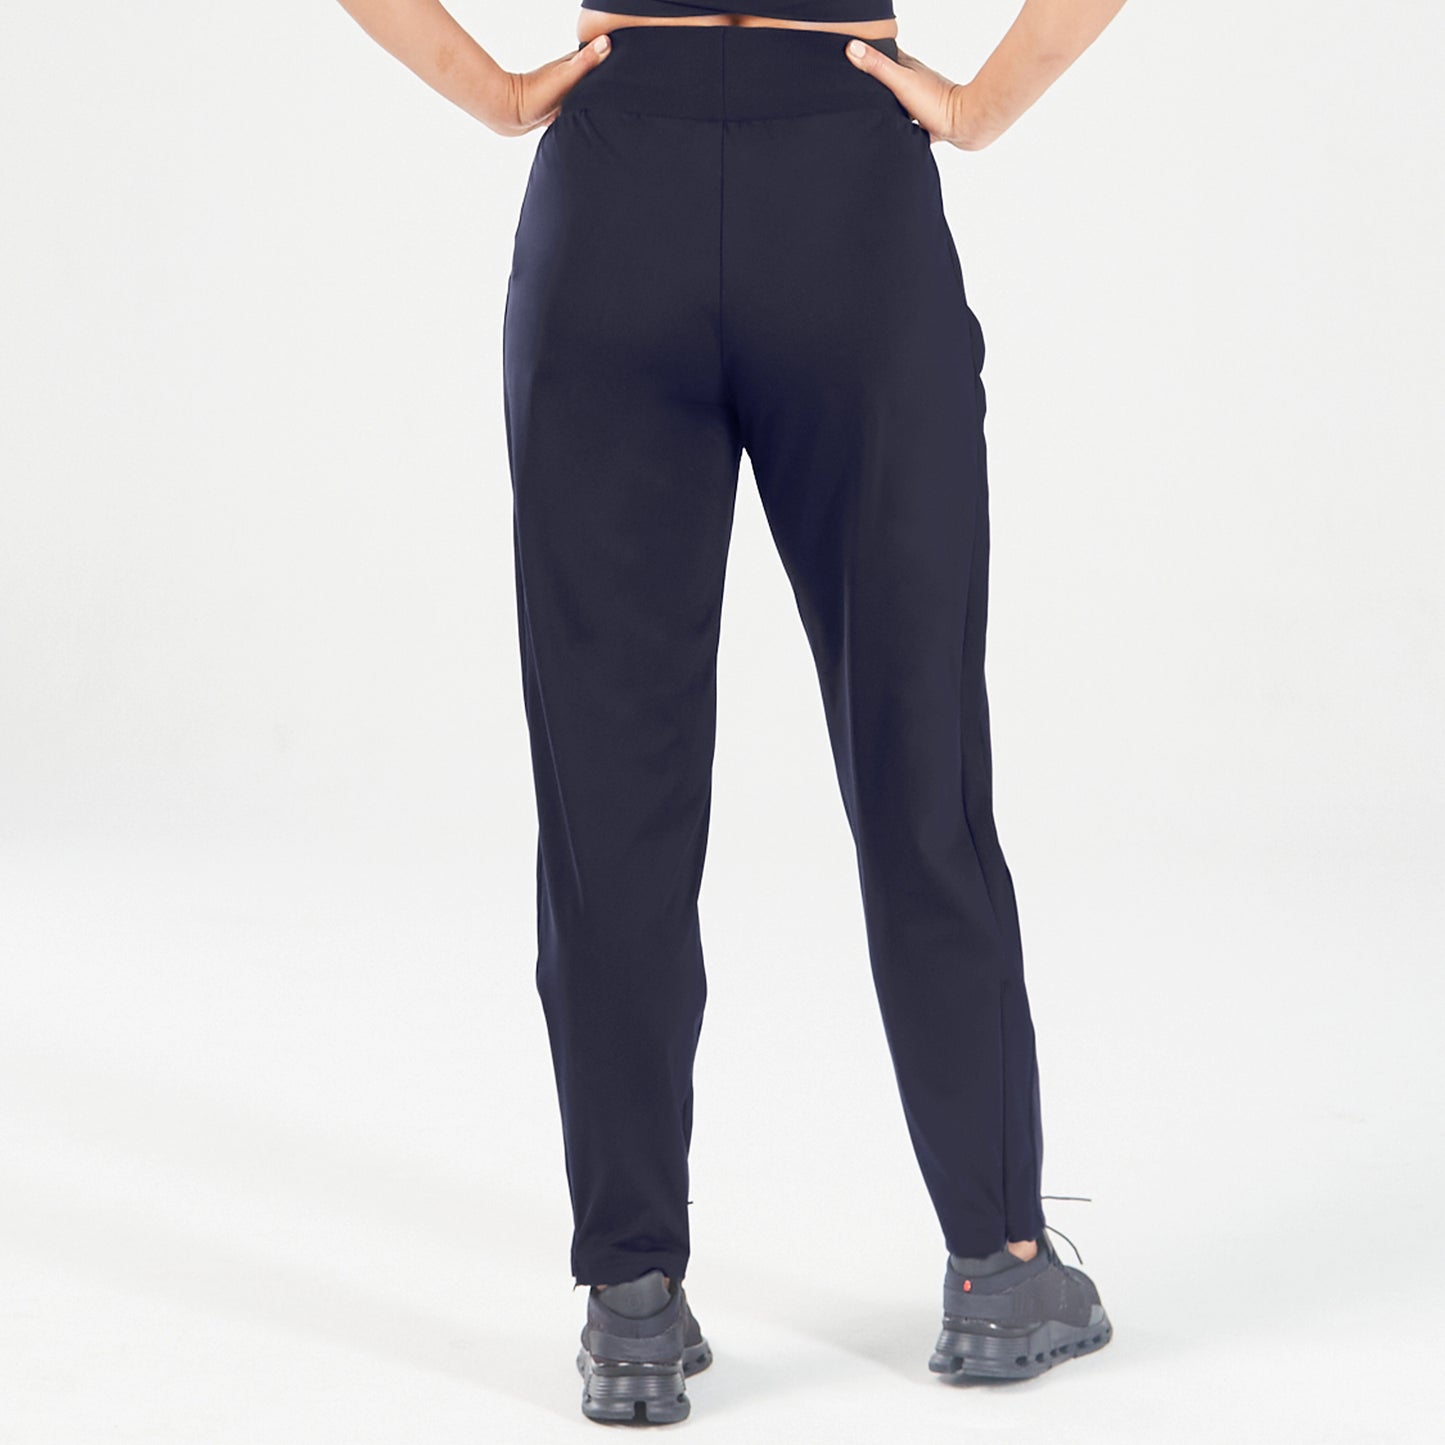 GB, Core Flare Joggers - Black, Workout Pants